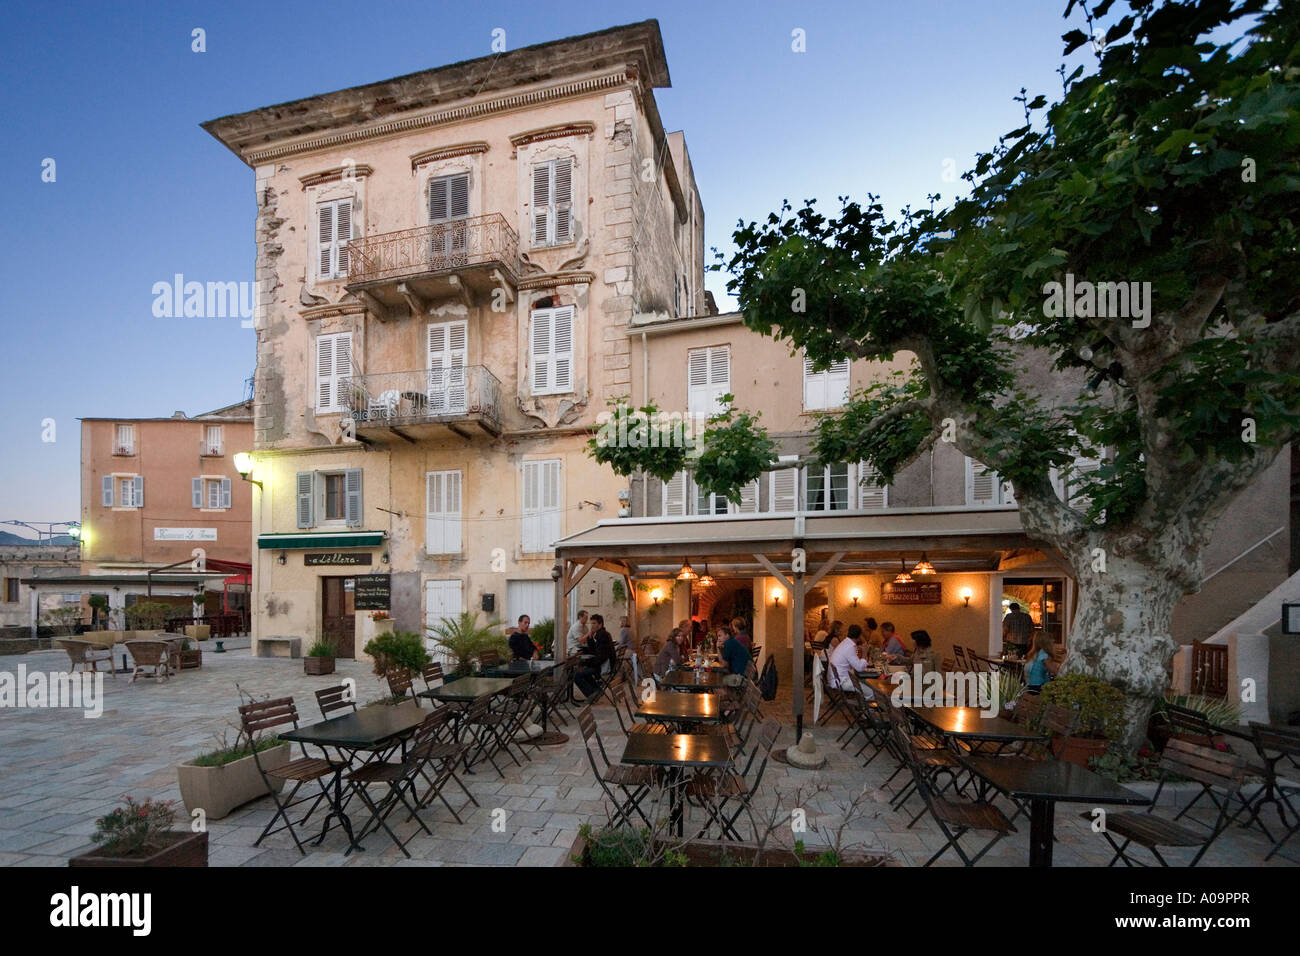 Restaurant at dusk in the main square, Erbalunga, Cap Corse, Corsica, France Stock Photo